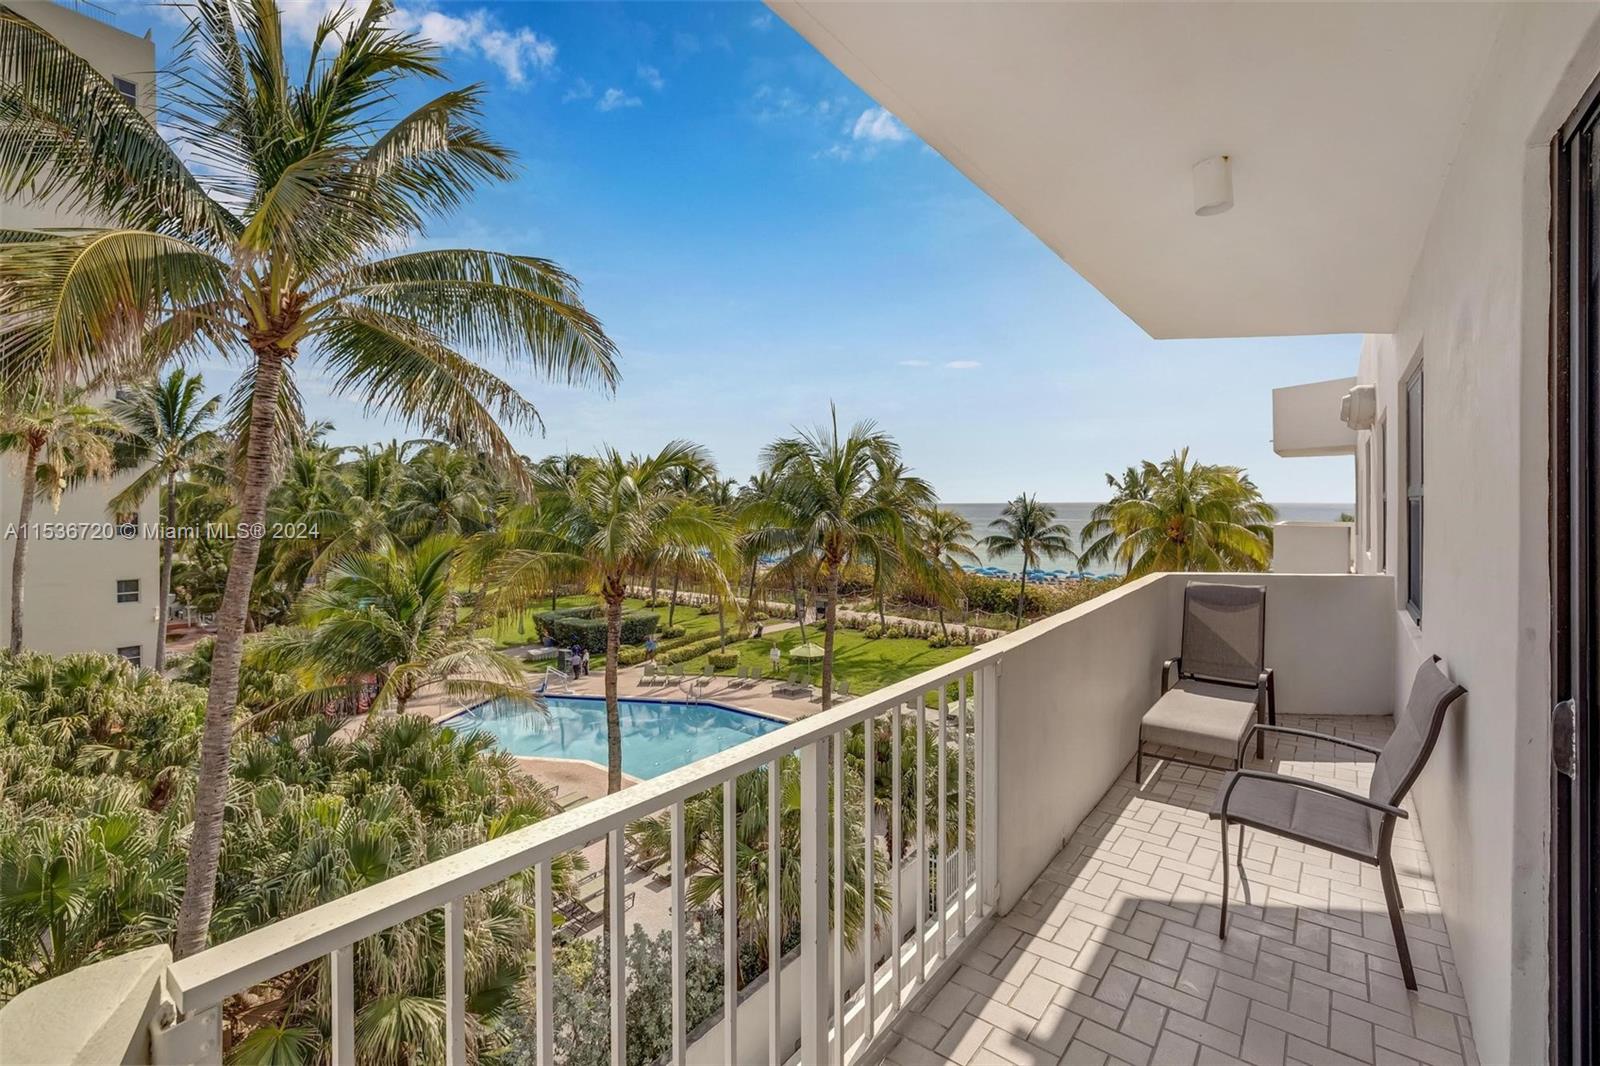 Rental Property at 4301 Collins Ave 410, Miami Beach, Miami-Dade County, Florida - Bedrooms: 2 
Bathrooms: 2  - $3,600 MO.